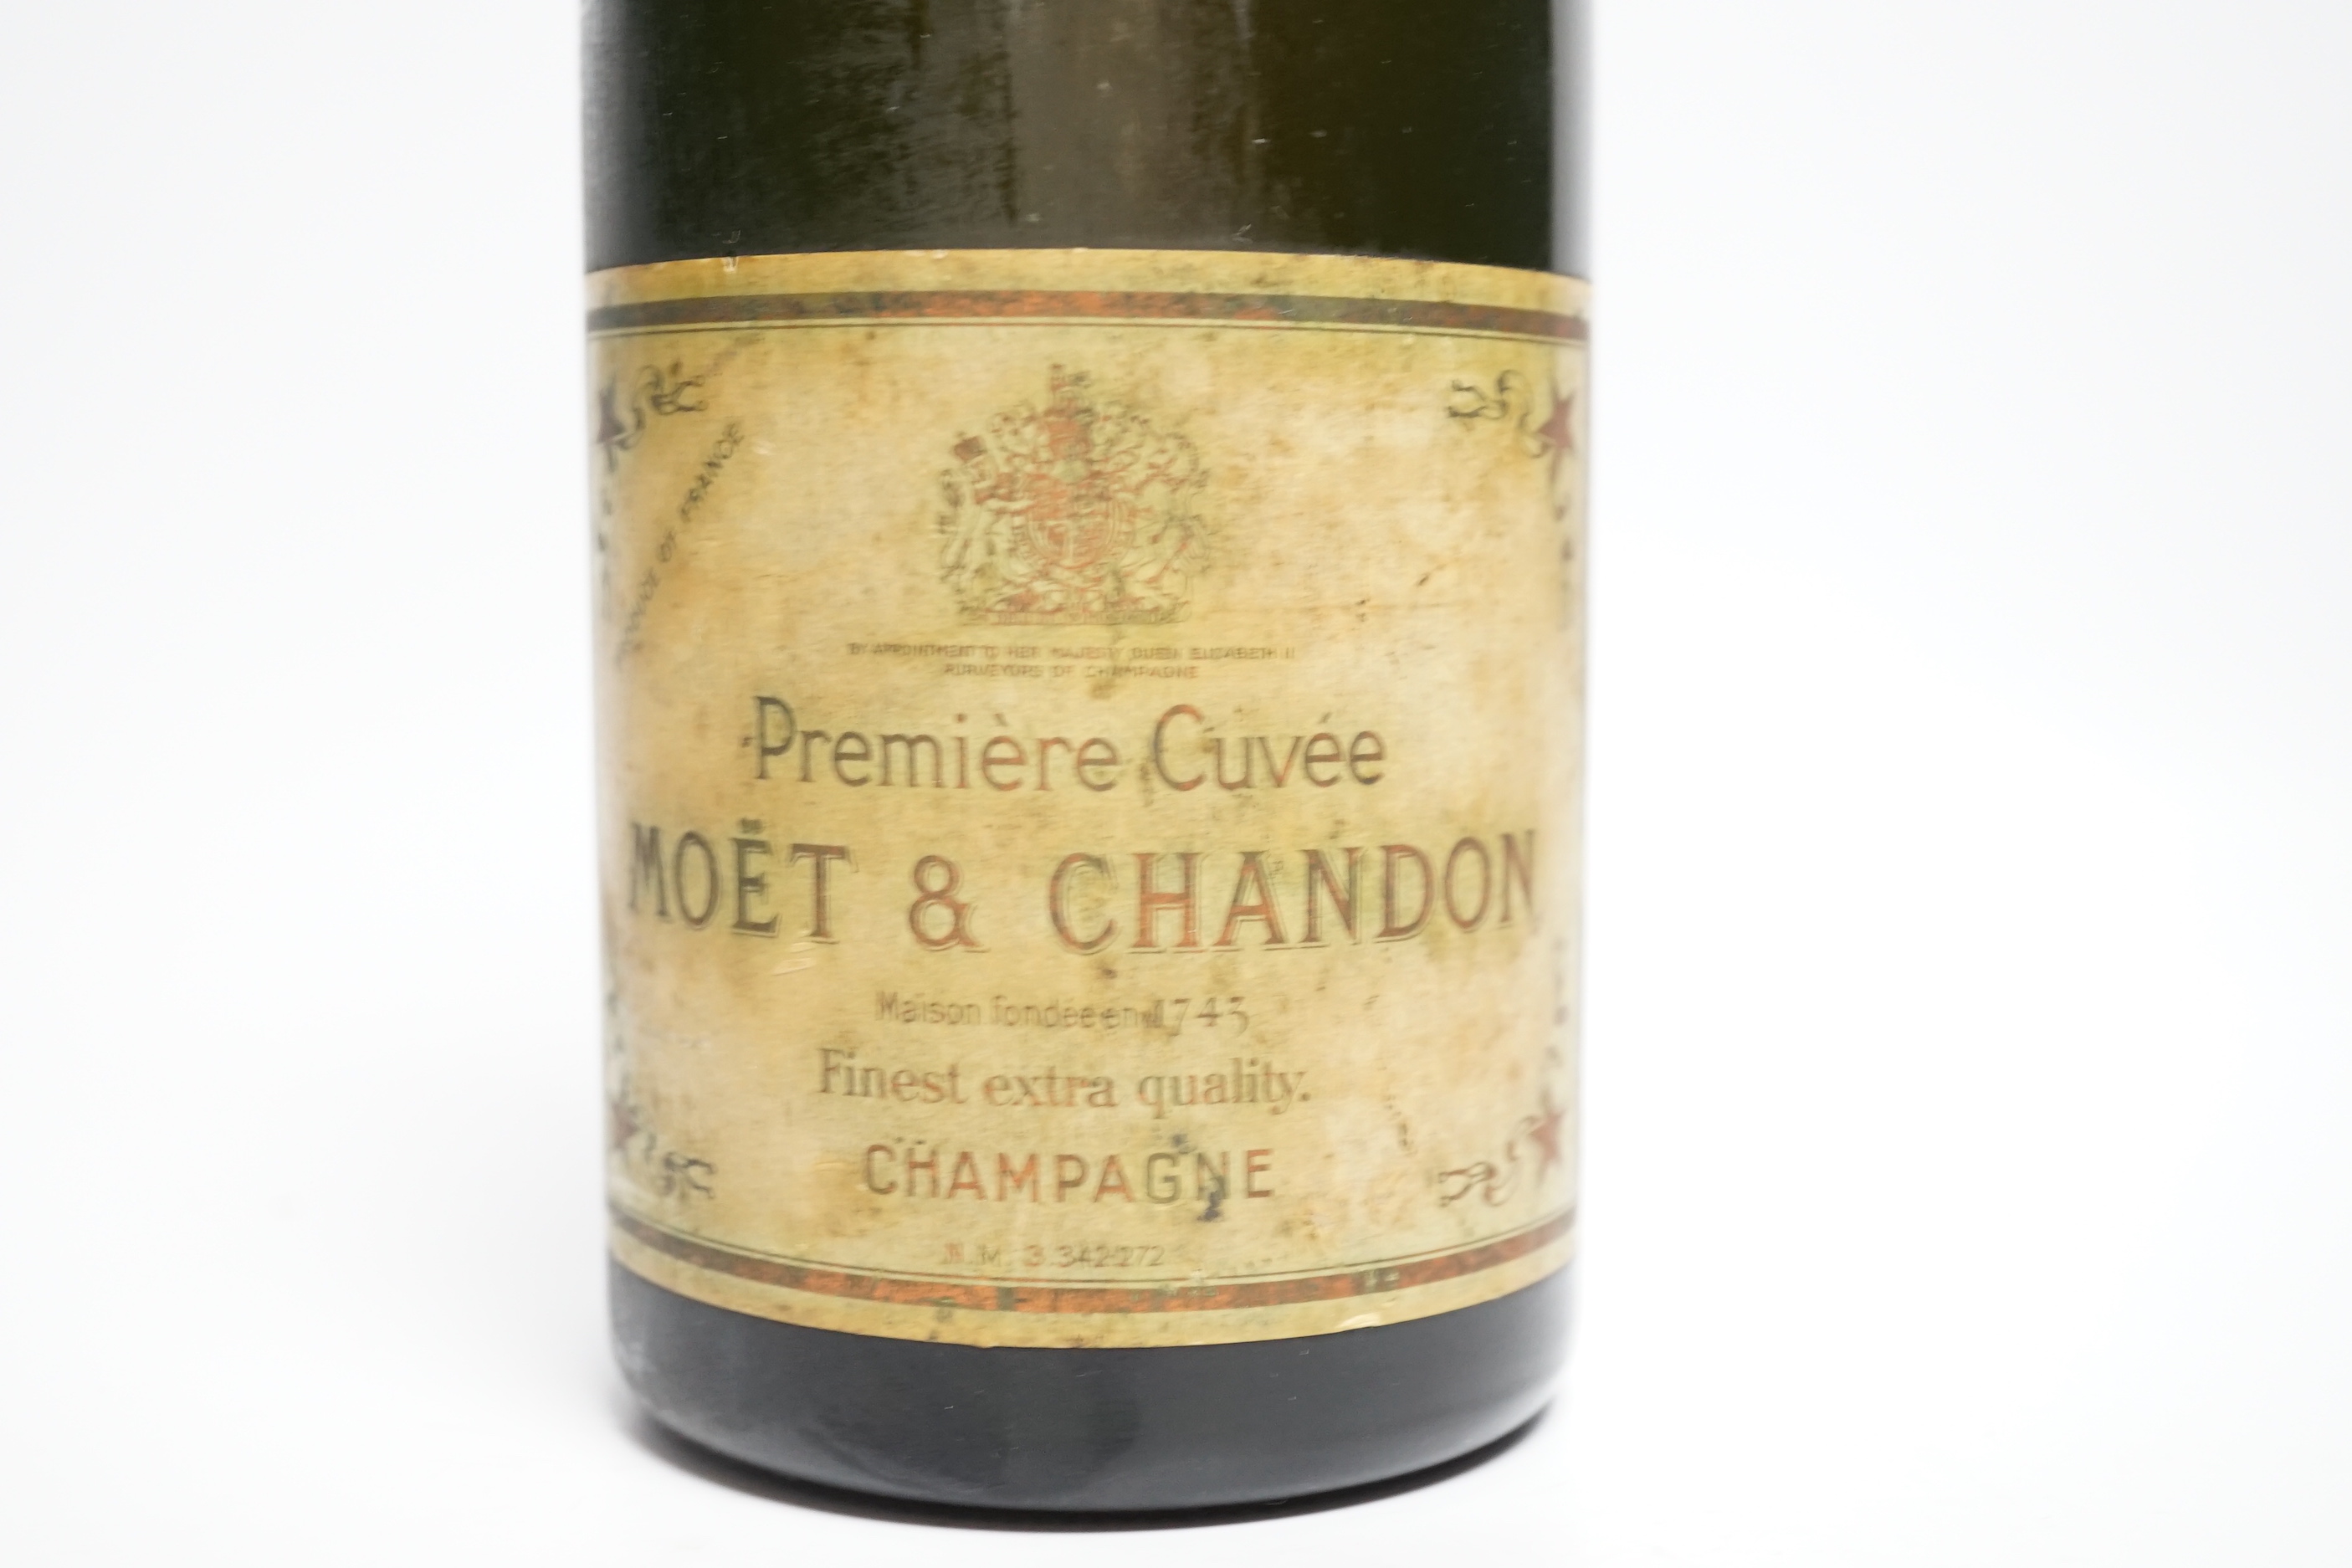 A bottle of Moet et Chandon champagne - Image 2 of 6